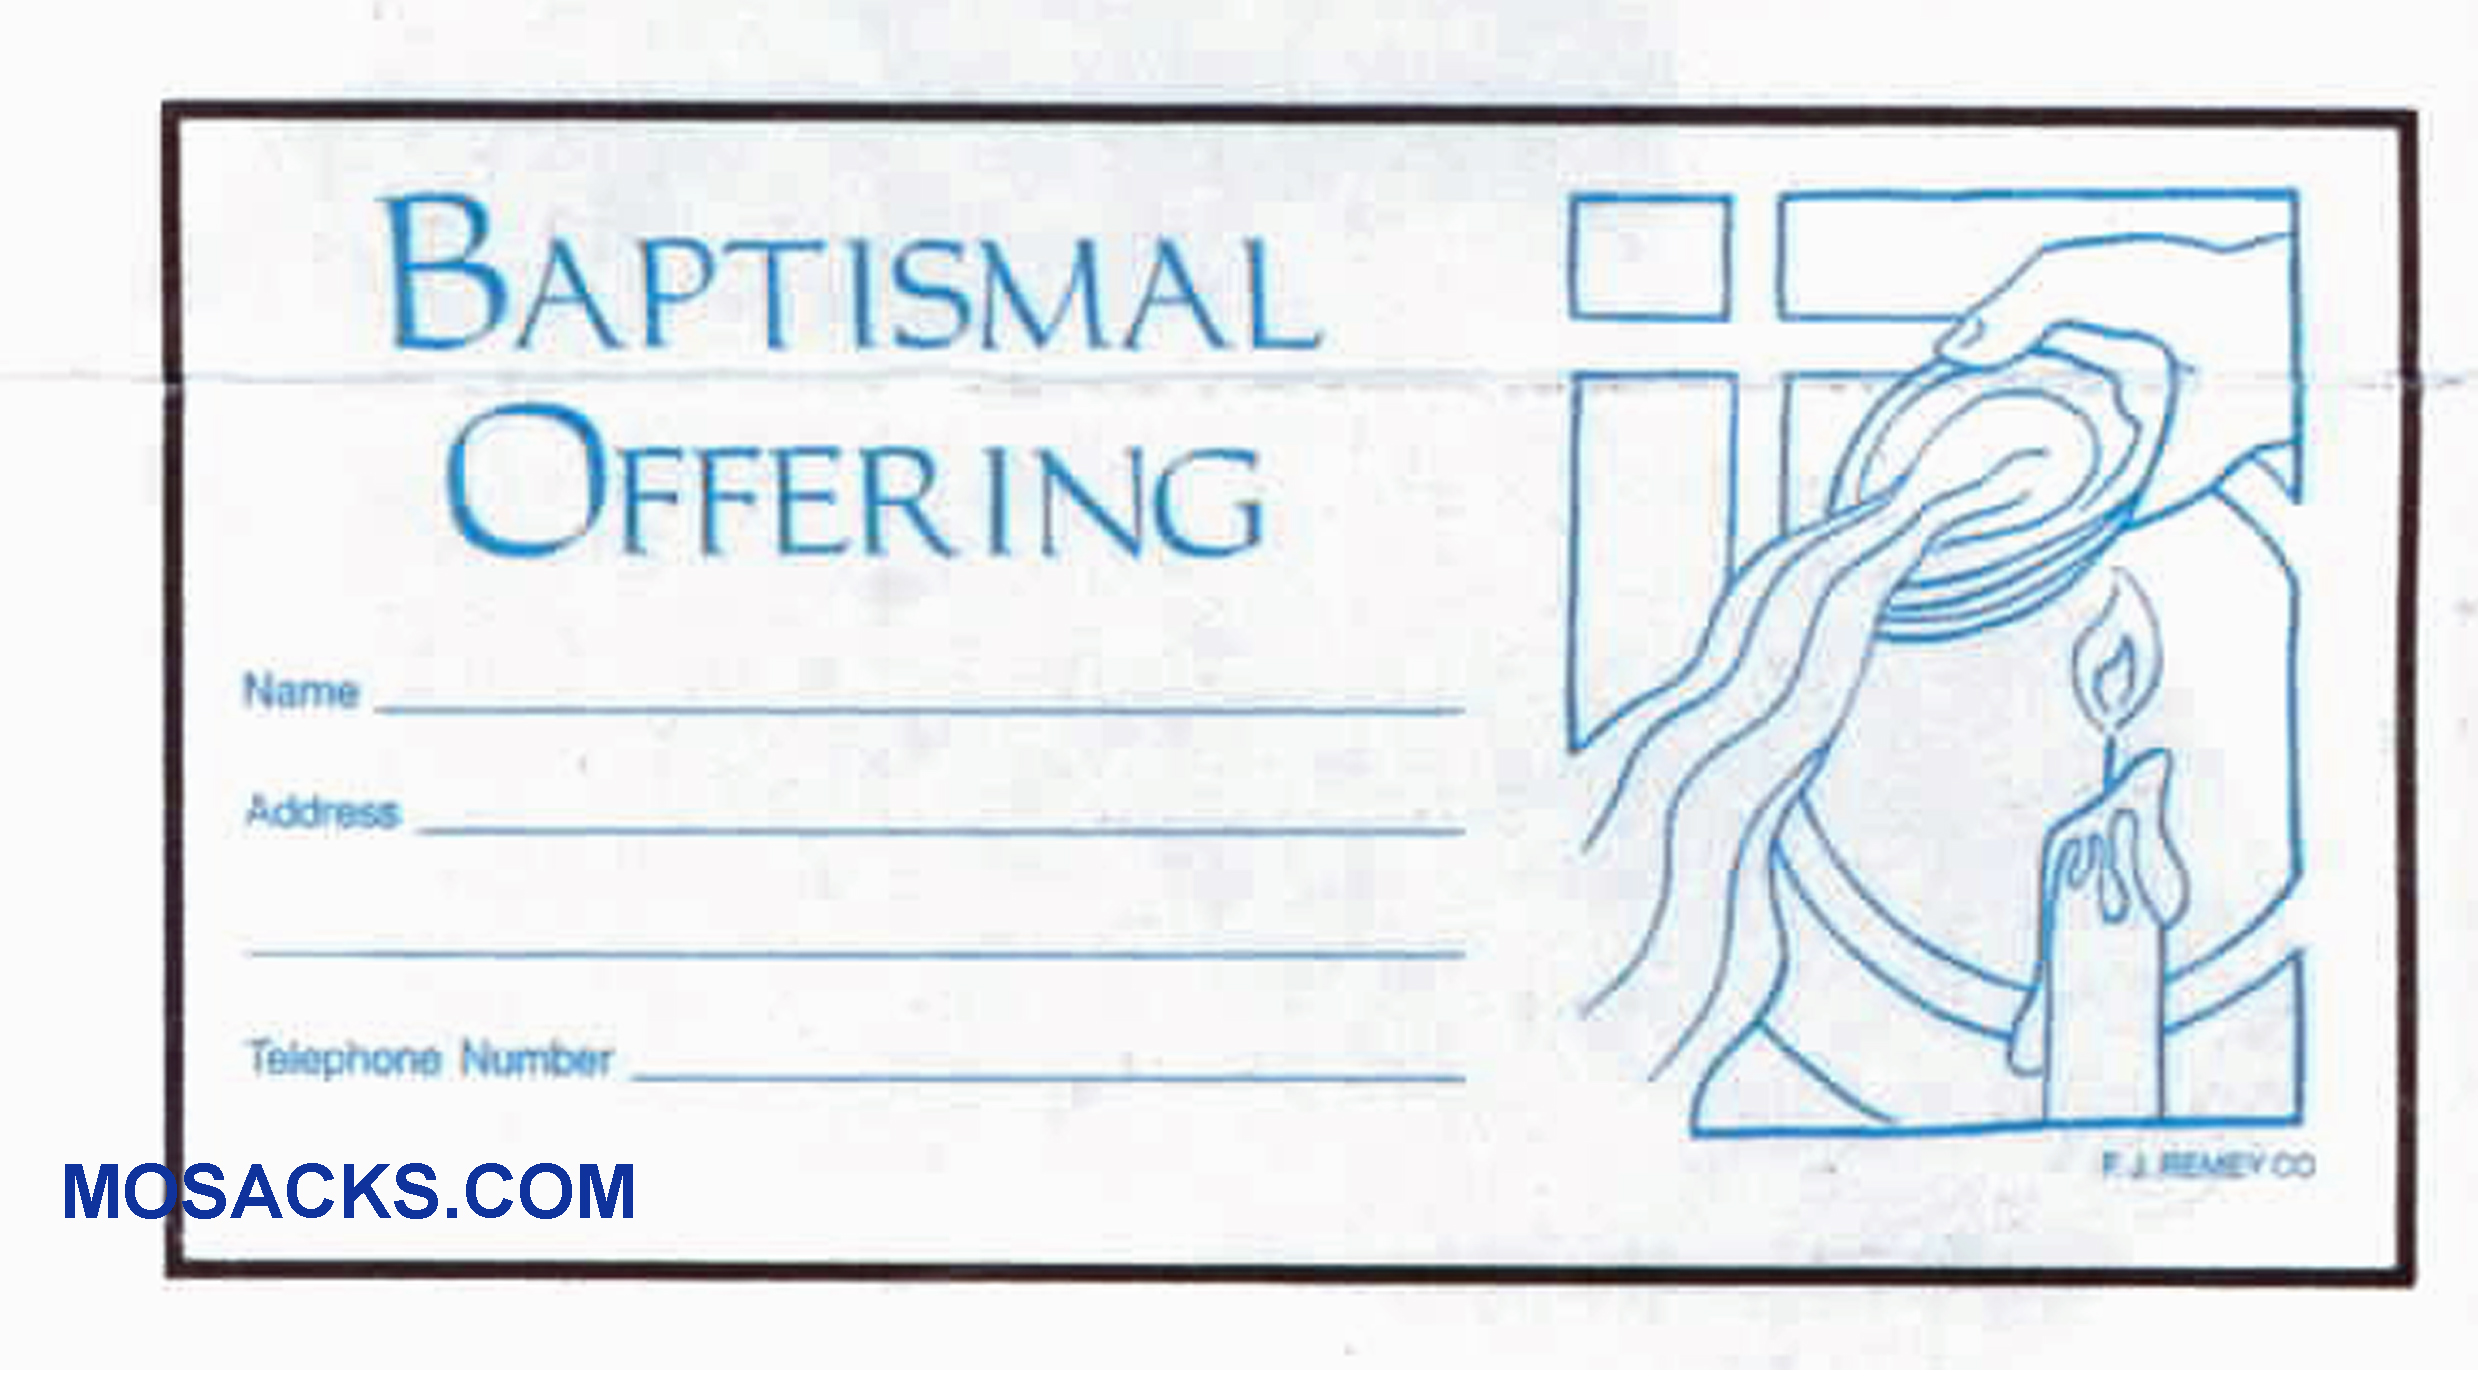 Baptismal Offering Envelope 6-1/4 x 3-1/8 #304-339